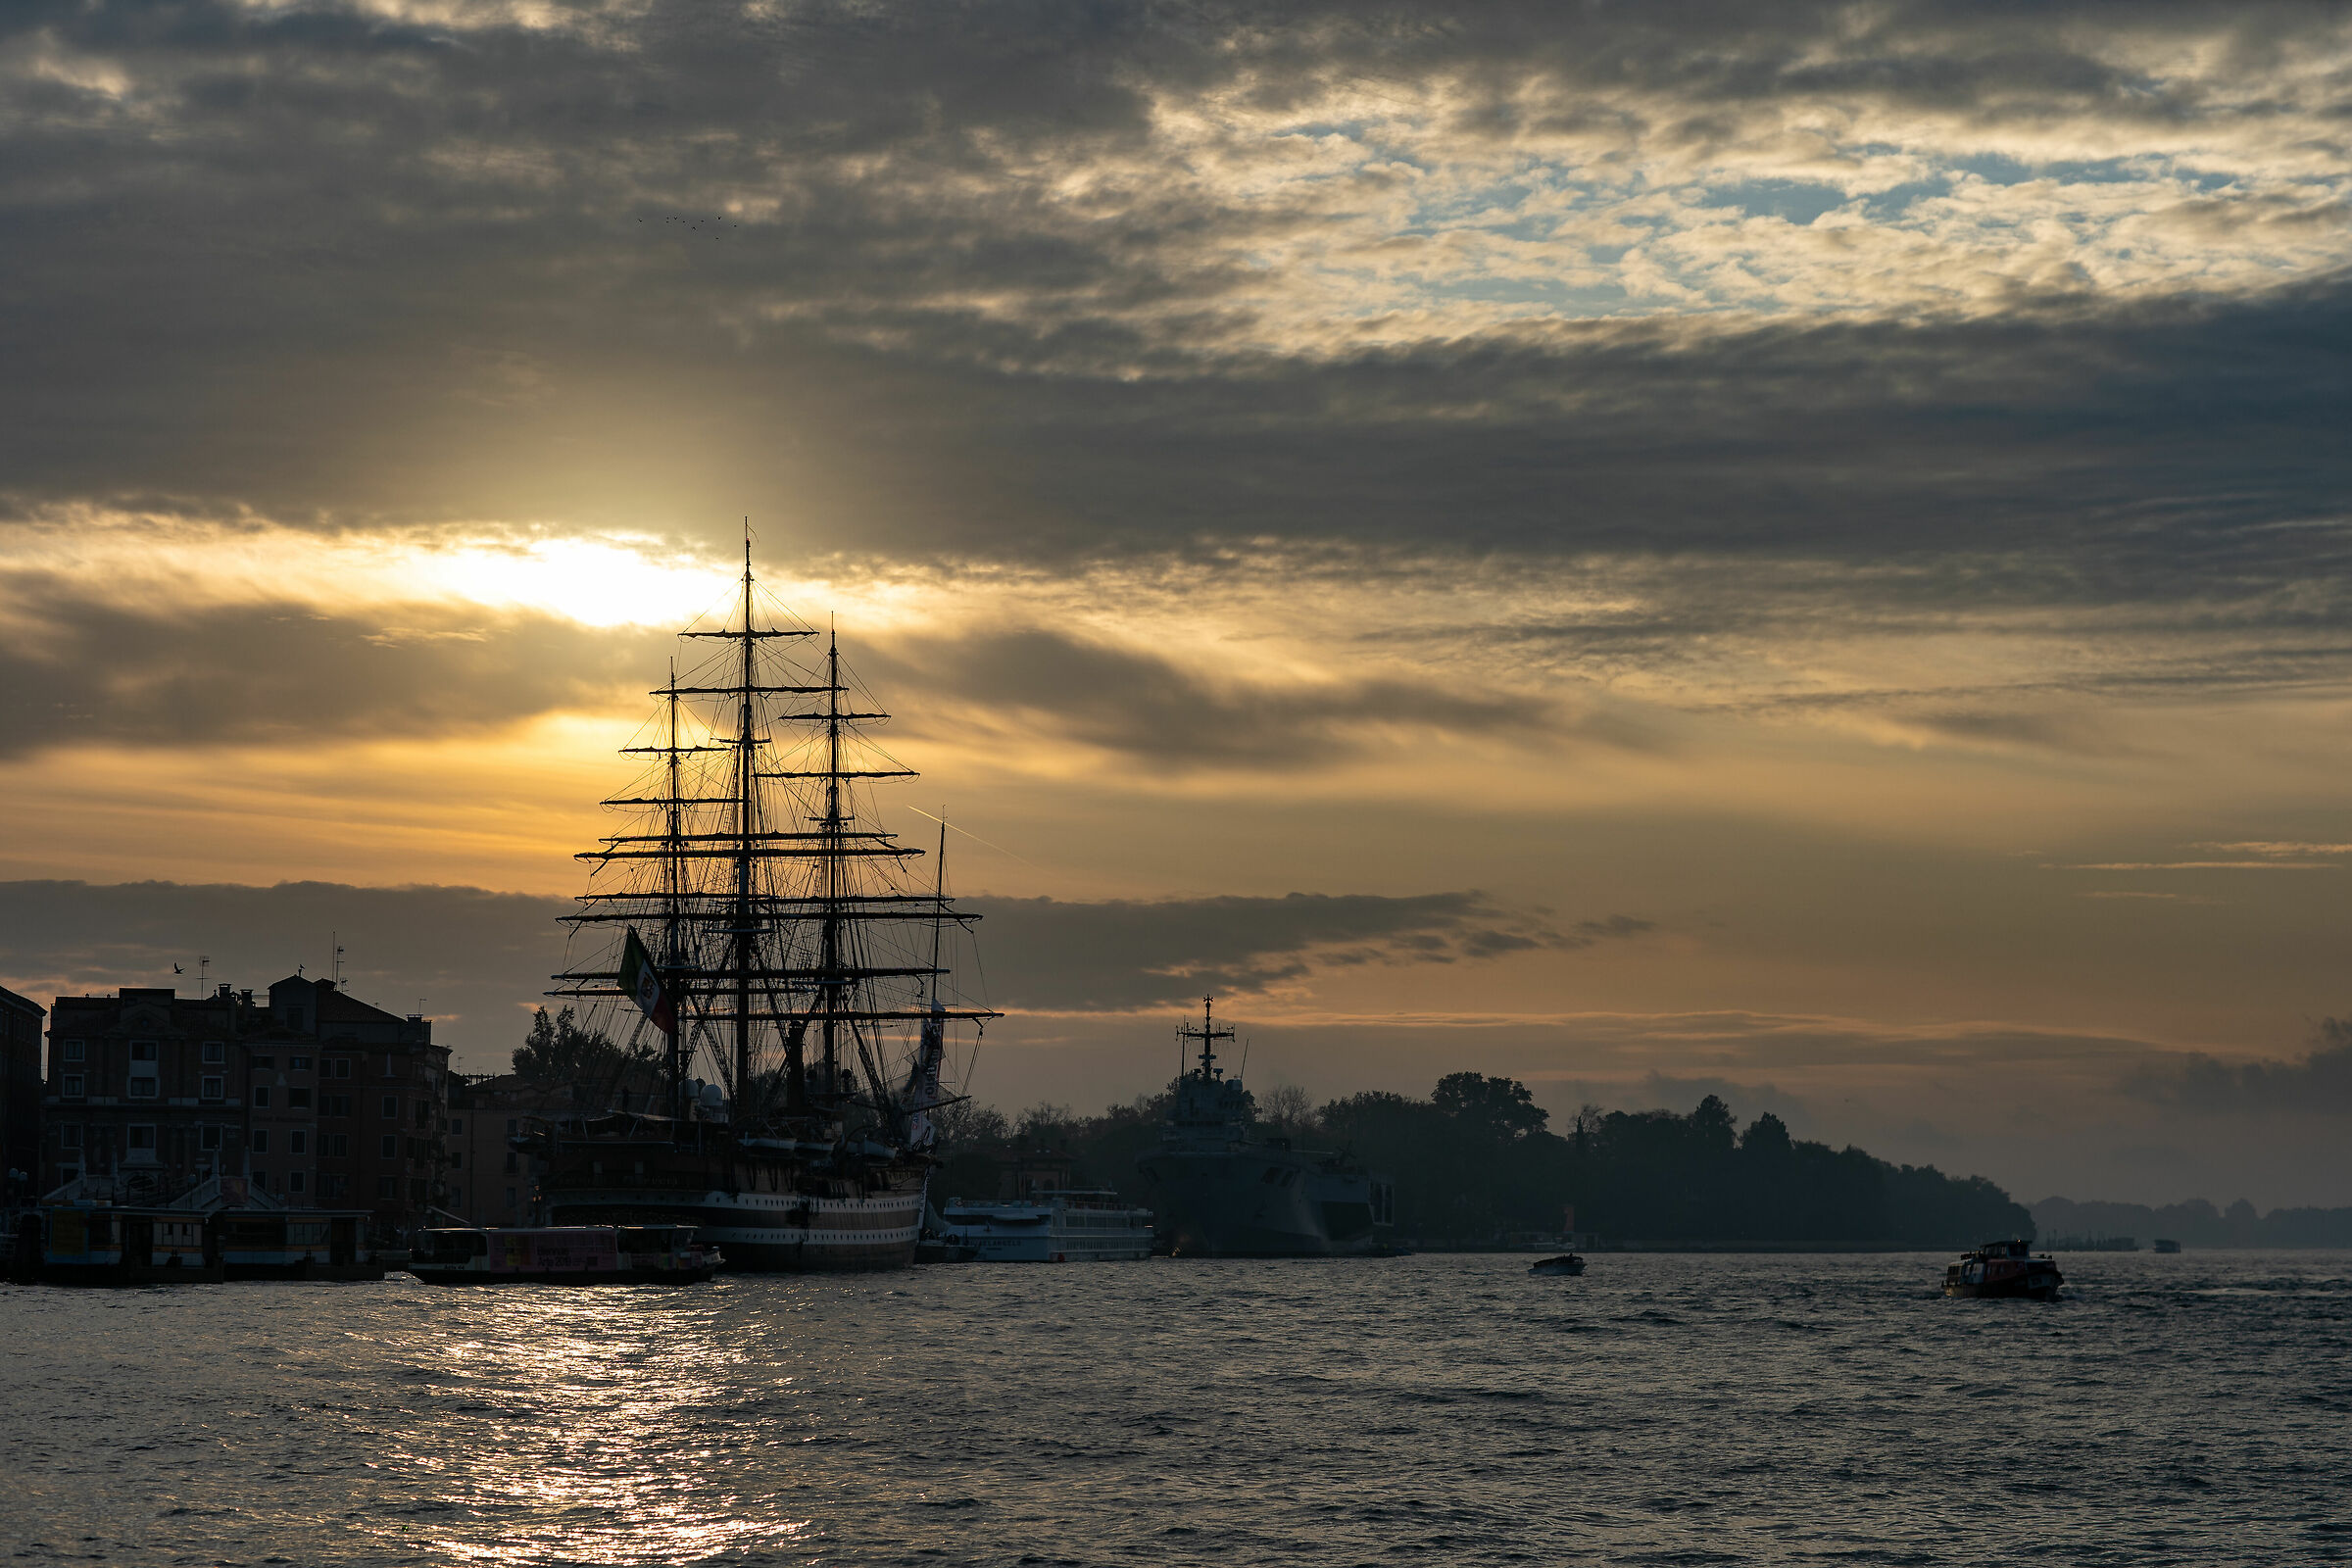 Vespucci ship at dawn before departure...